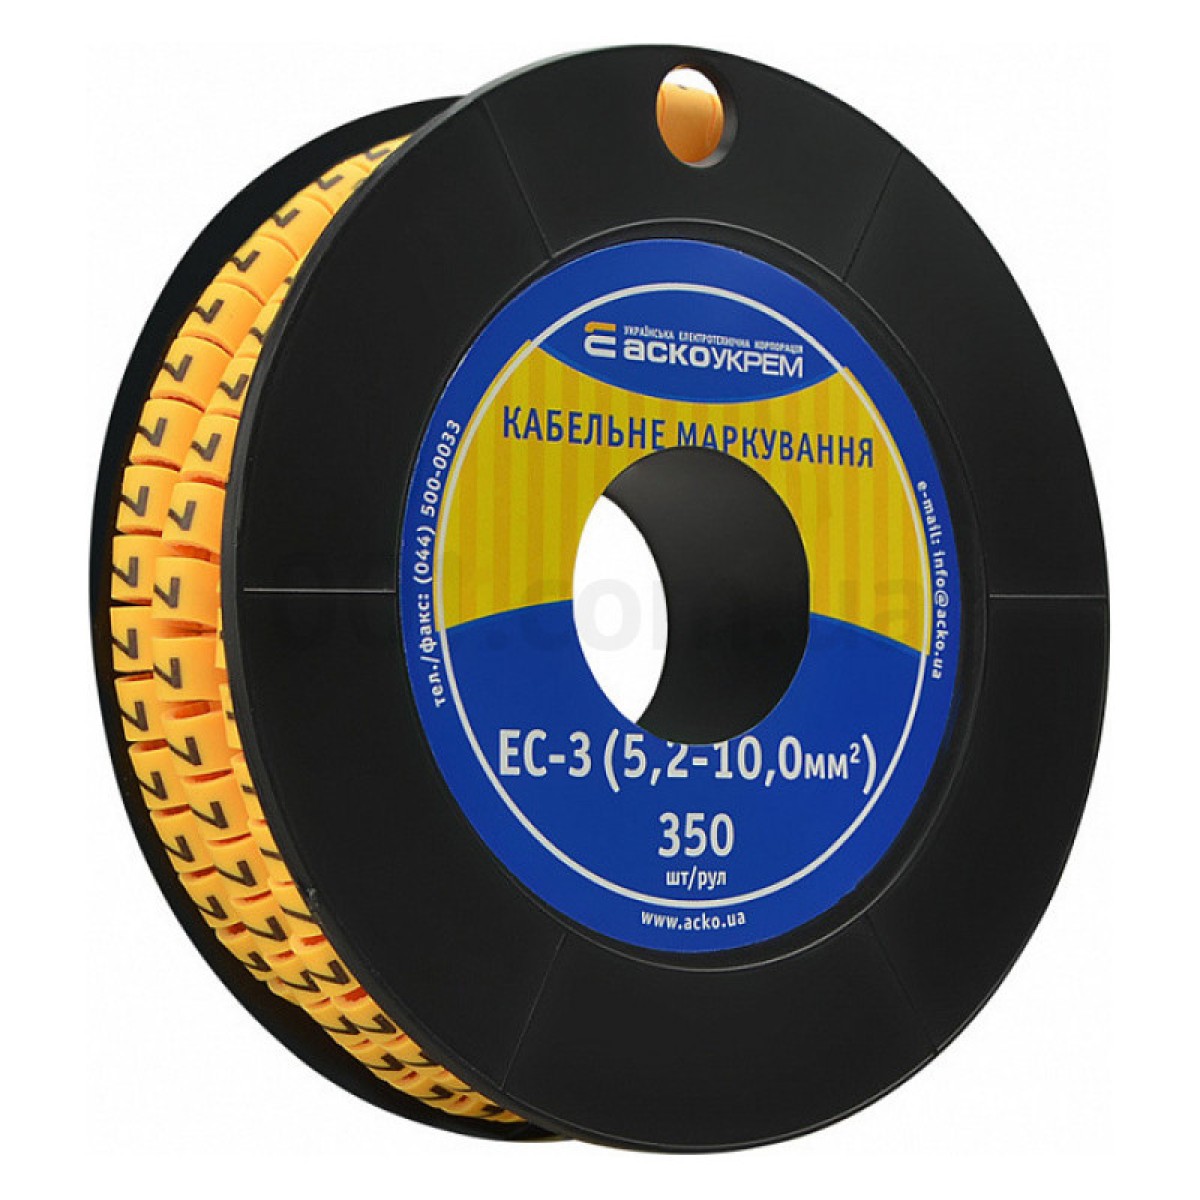 Маркировка EC-3 для кабеля 5,2-10,0 мм² символ «7» (рулон 250 шт.), АСКО-УКРЕМ 98_98.jpg - фото 1